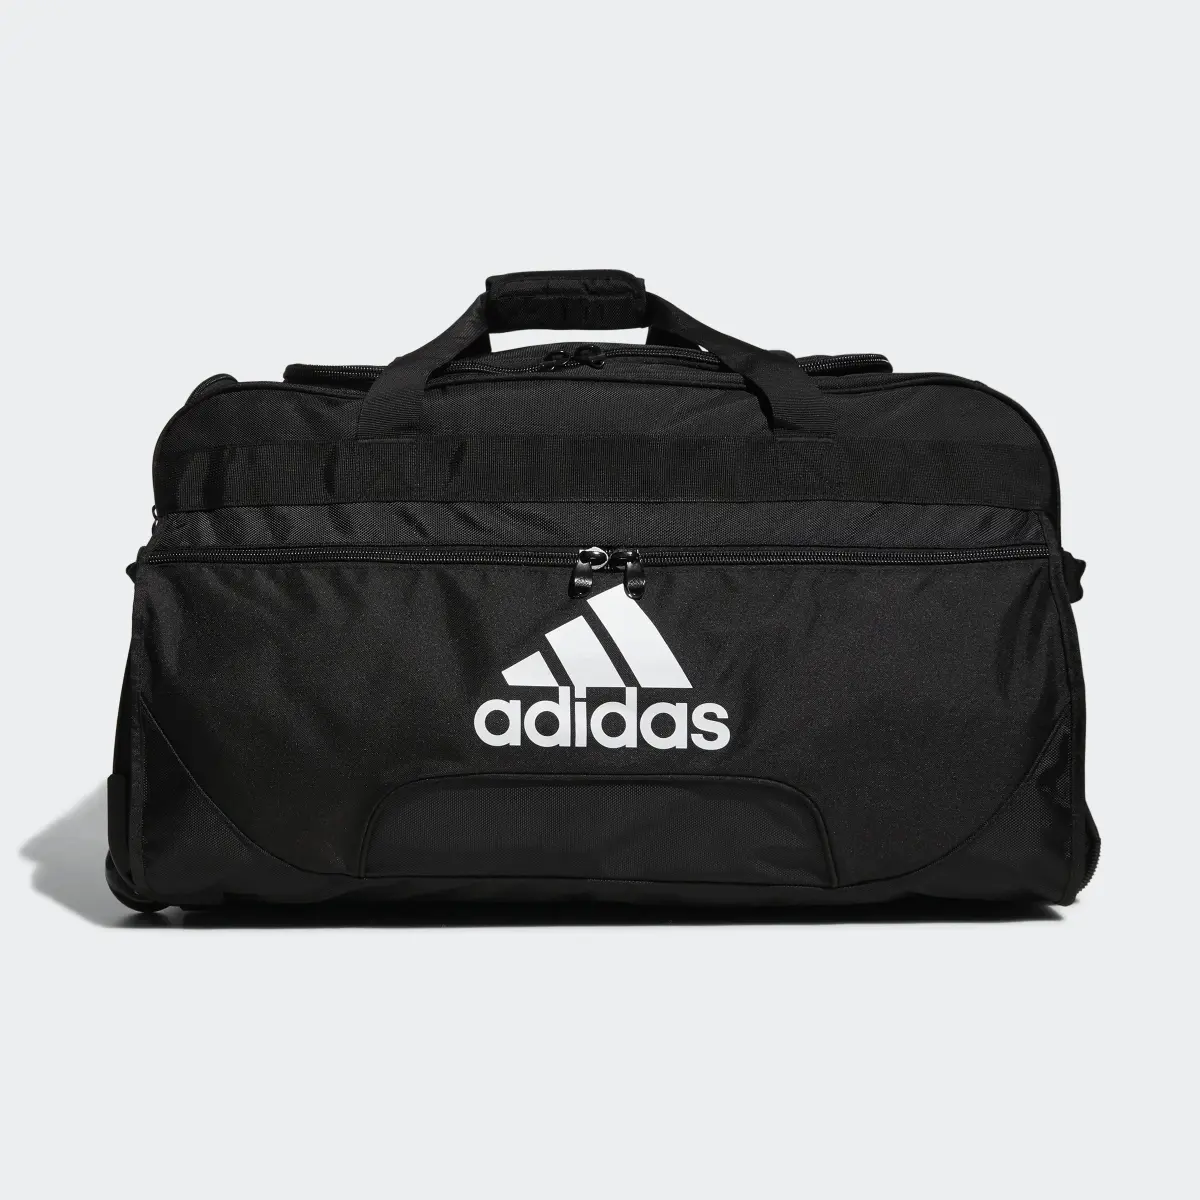 Adidas Team Wheel Bag. 2